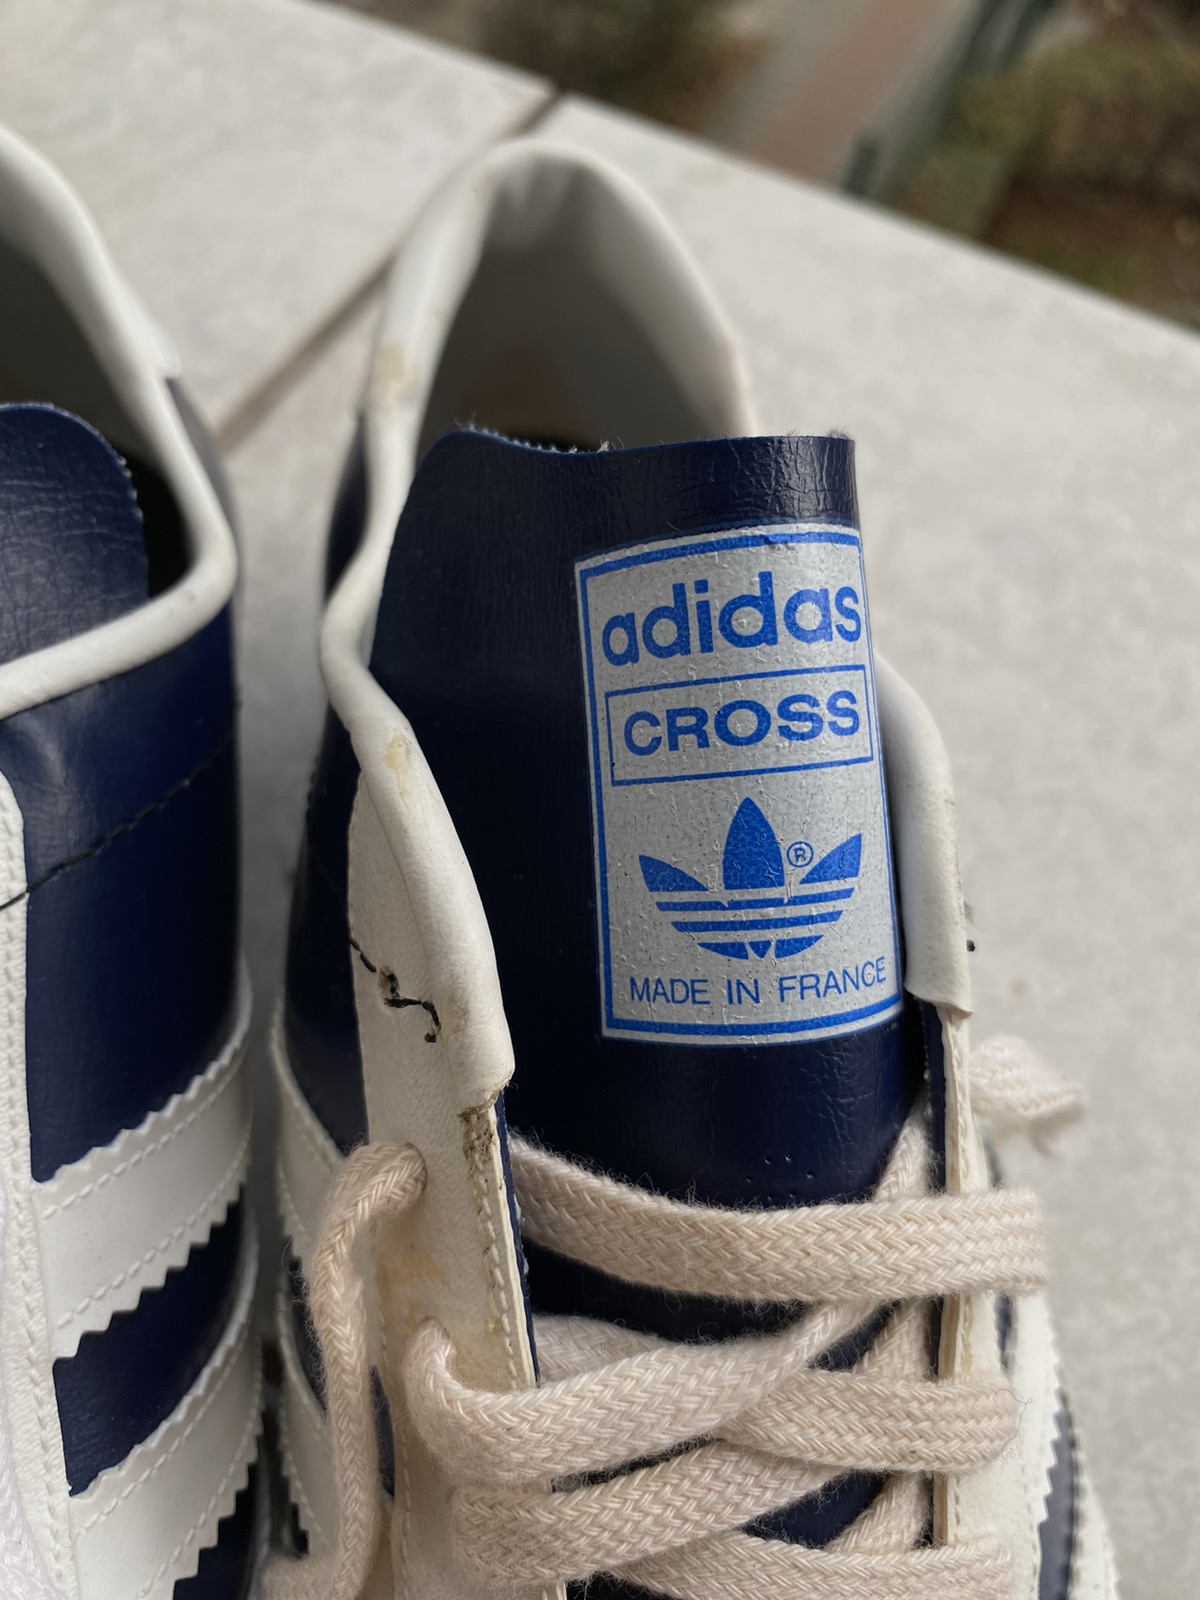 Adidas Cross football boots very rare 1970-80s - 3